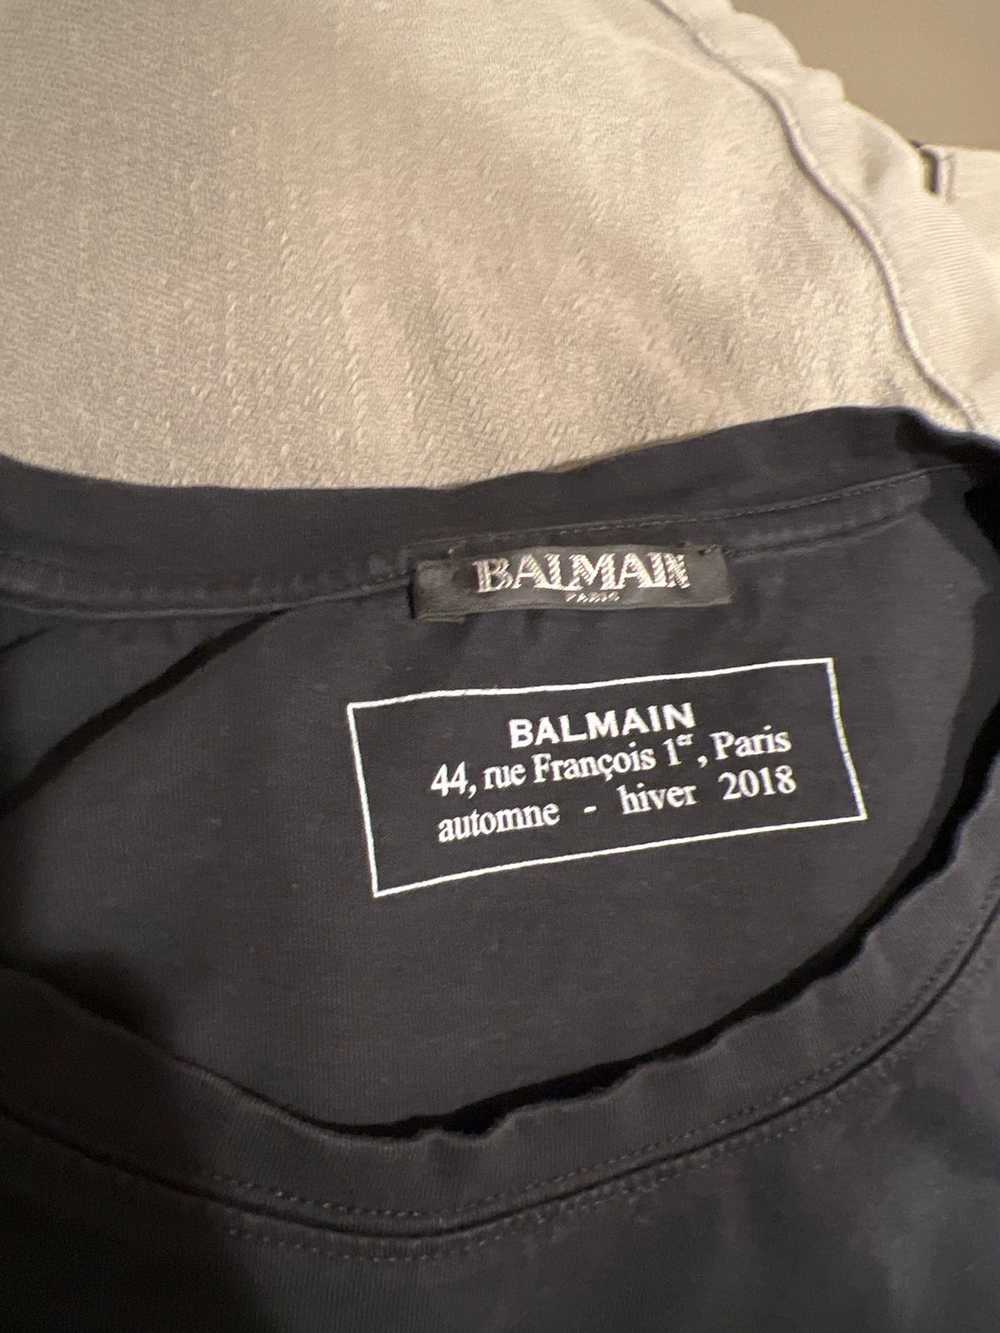 Balmain Balmain Logo Black T Shirt - image 4